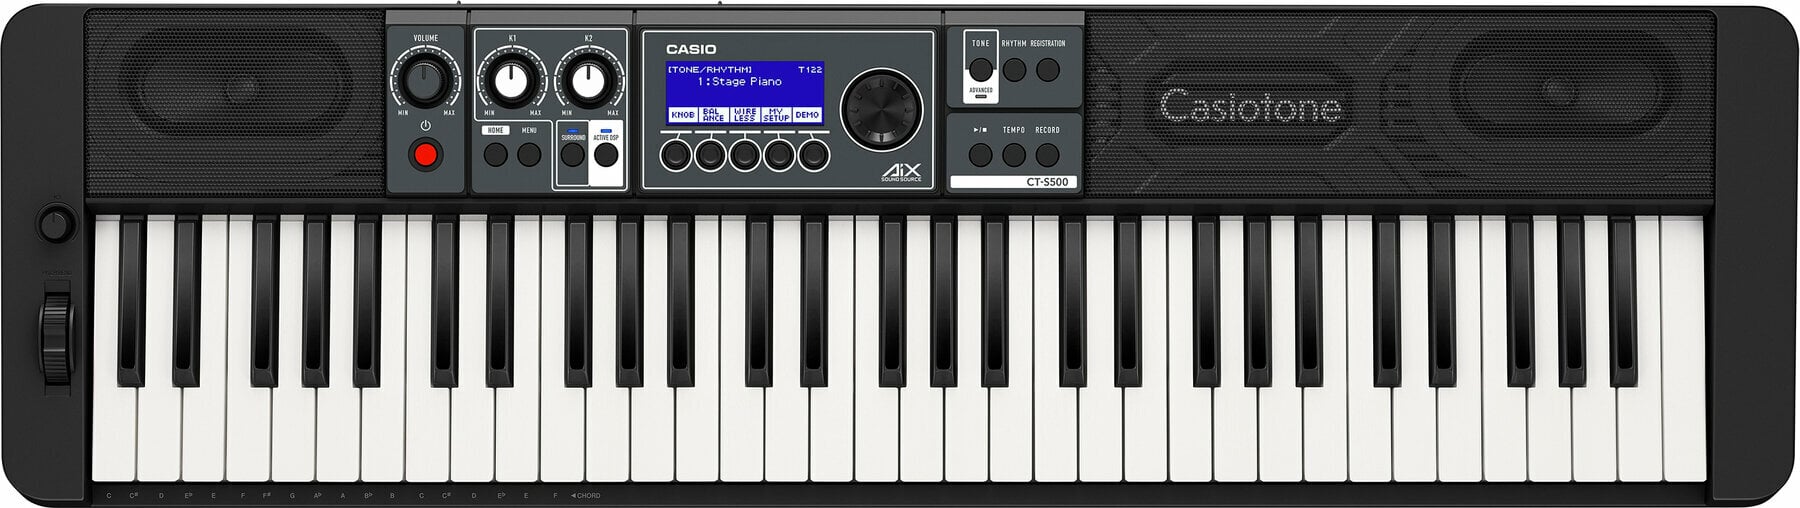 Keyboard med berøringsrespons Casio CT-S500